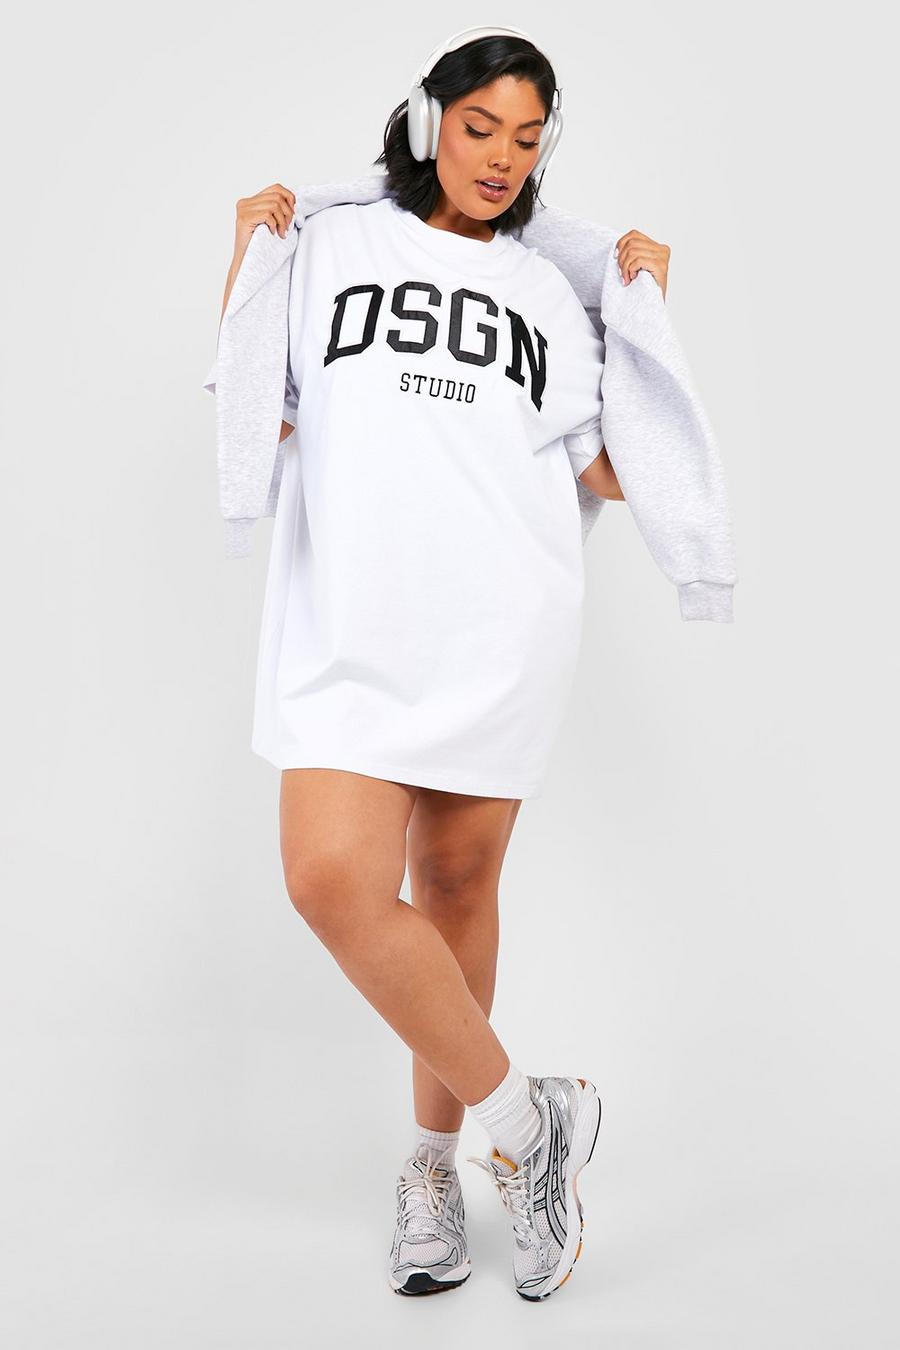 White Plus Applique Dsgn Studio Oversized T-shirt Dress image number 1